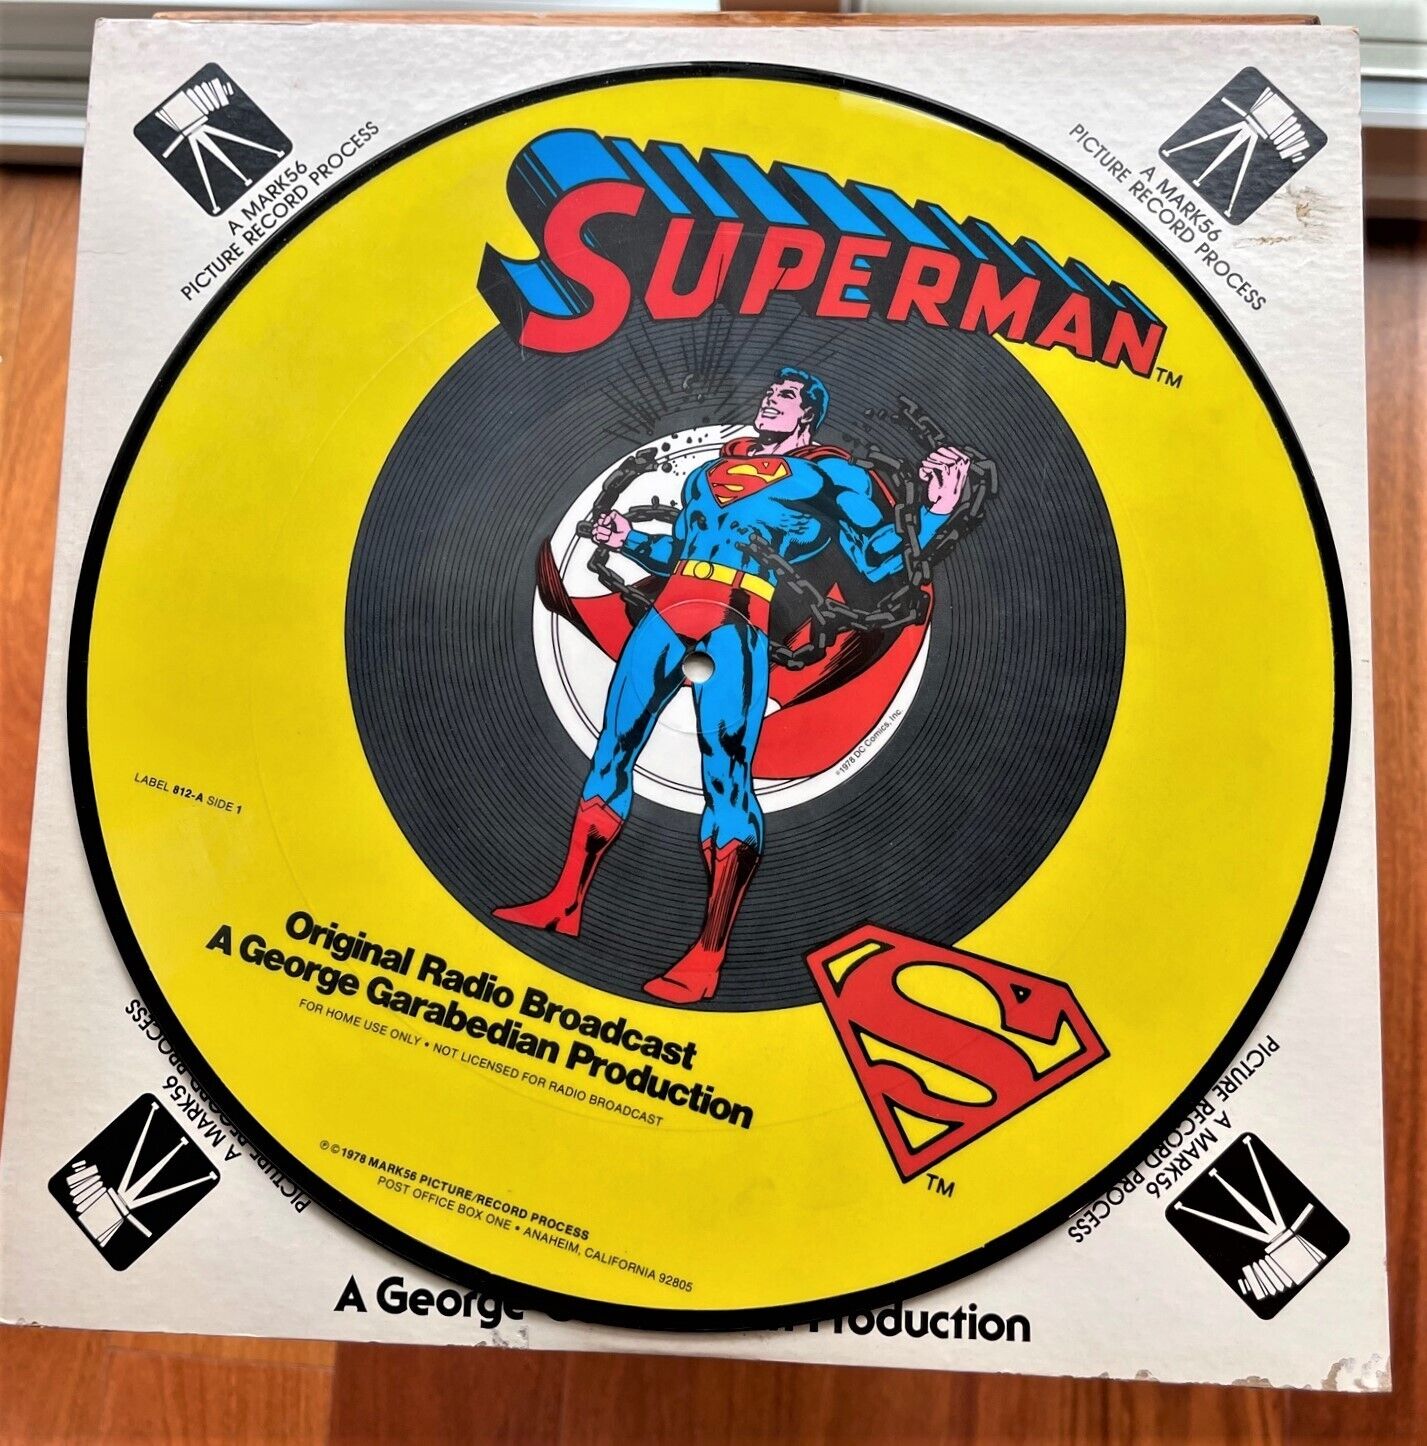 SUPERMAN ORIGINAL RADIO BROADCAST PICTURE DISK GEORGE GARABEDIAN PRODUCTION